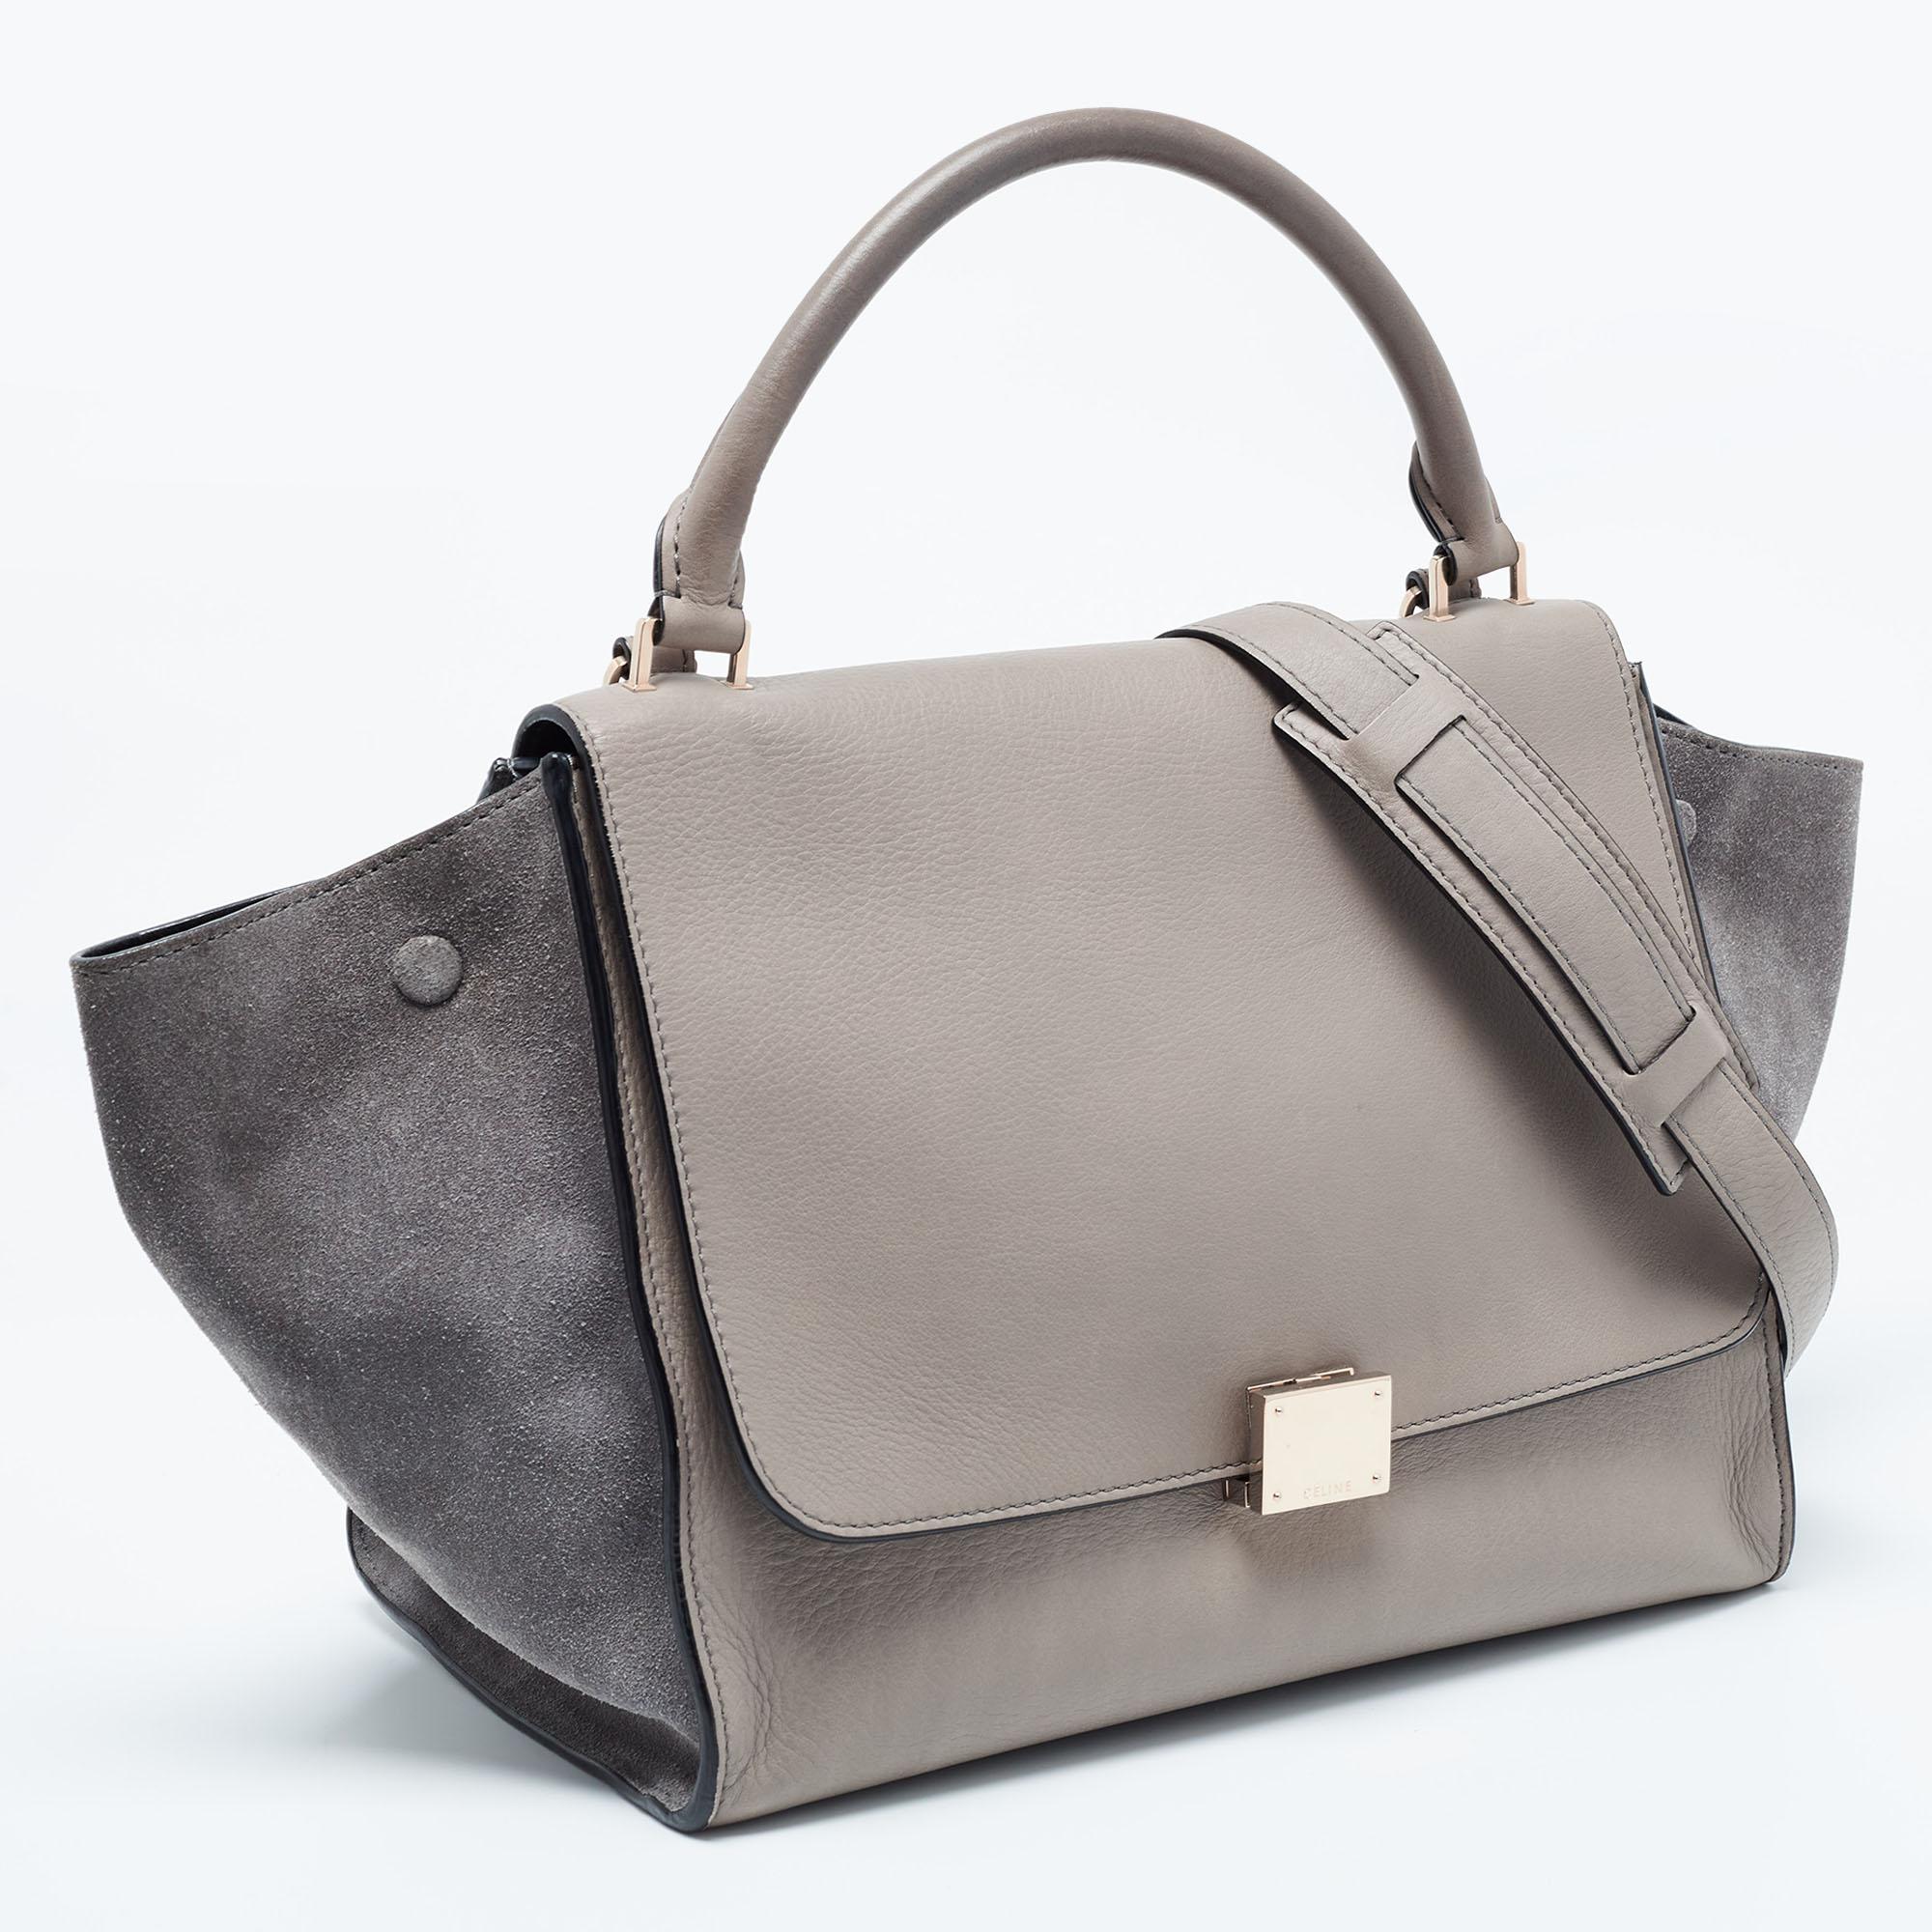 Celine Grey Leather and Suede Medium Trapeze Bag In Good Condition For Sale In Dubai, Al Qouz 2